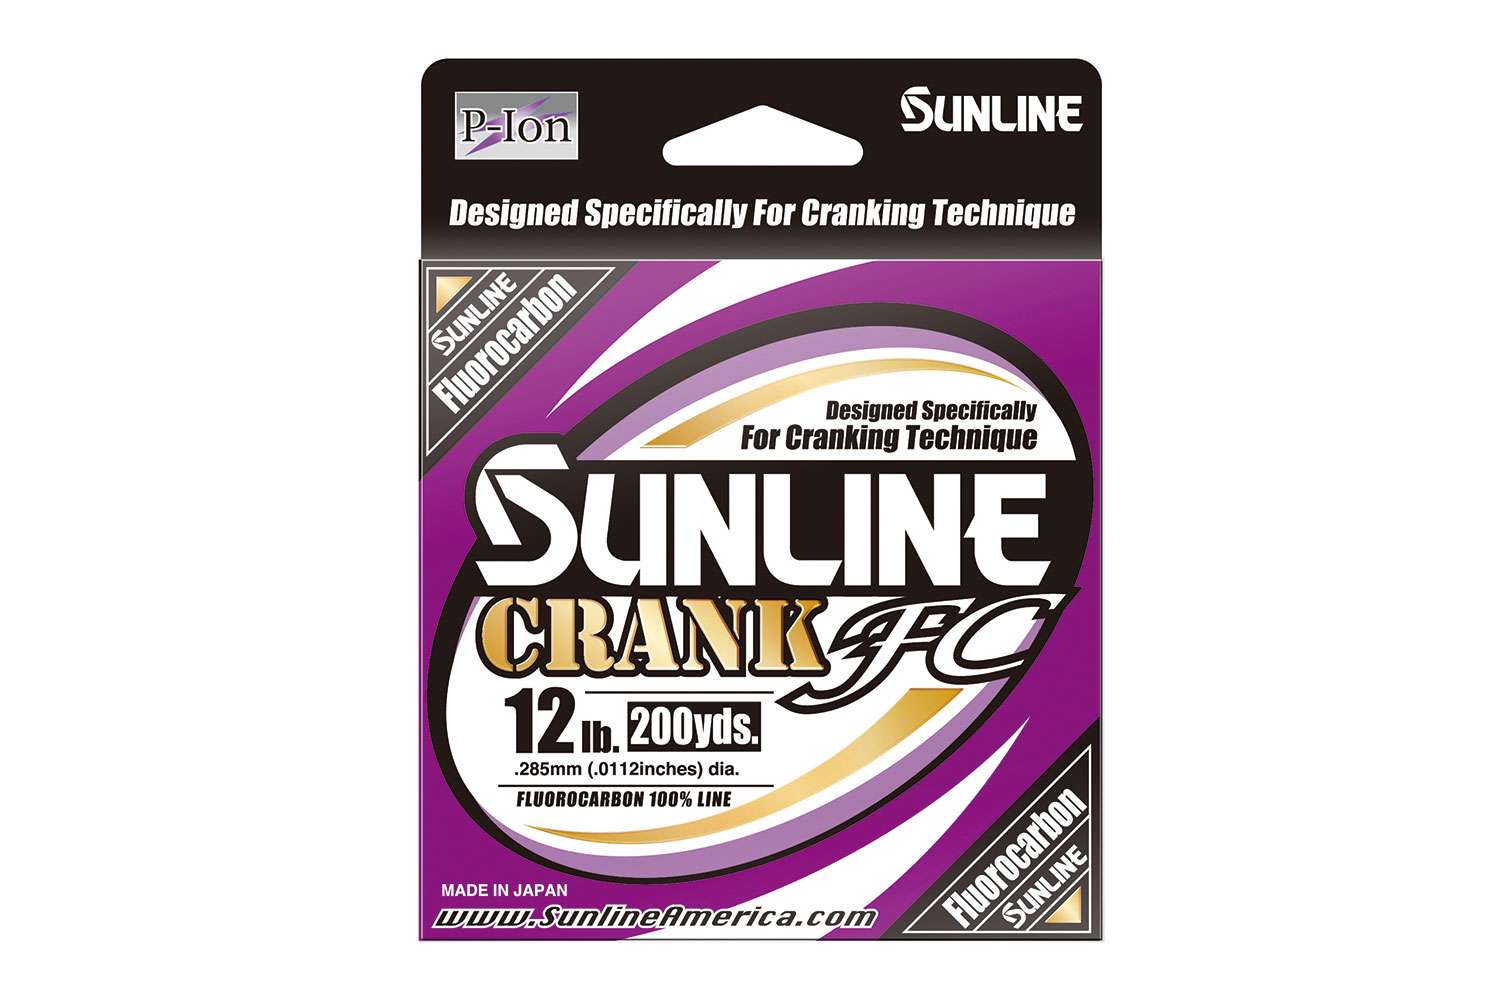 Sunline Crank FC, $25.99